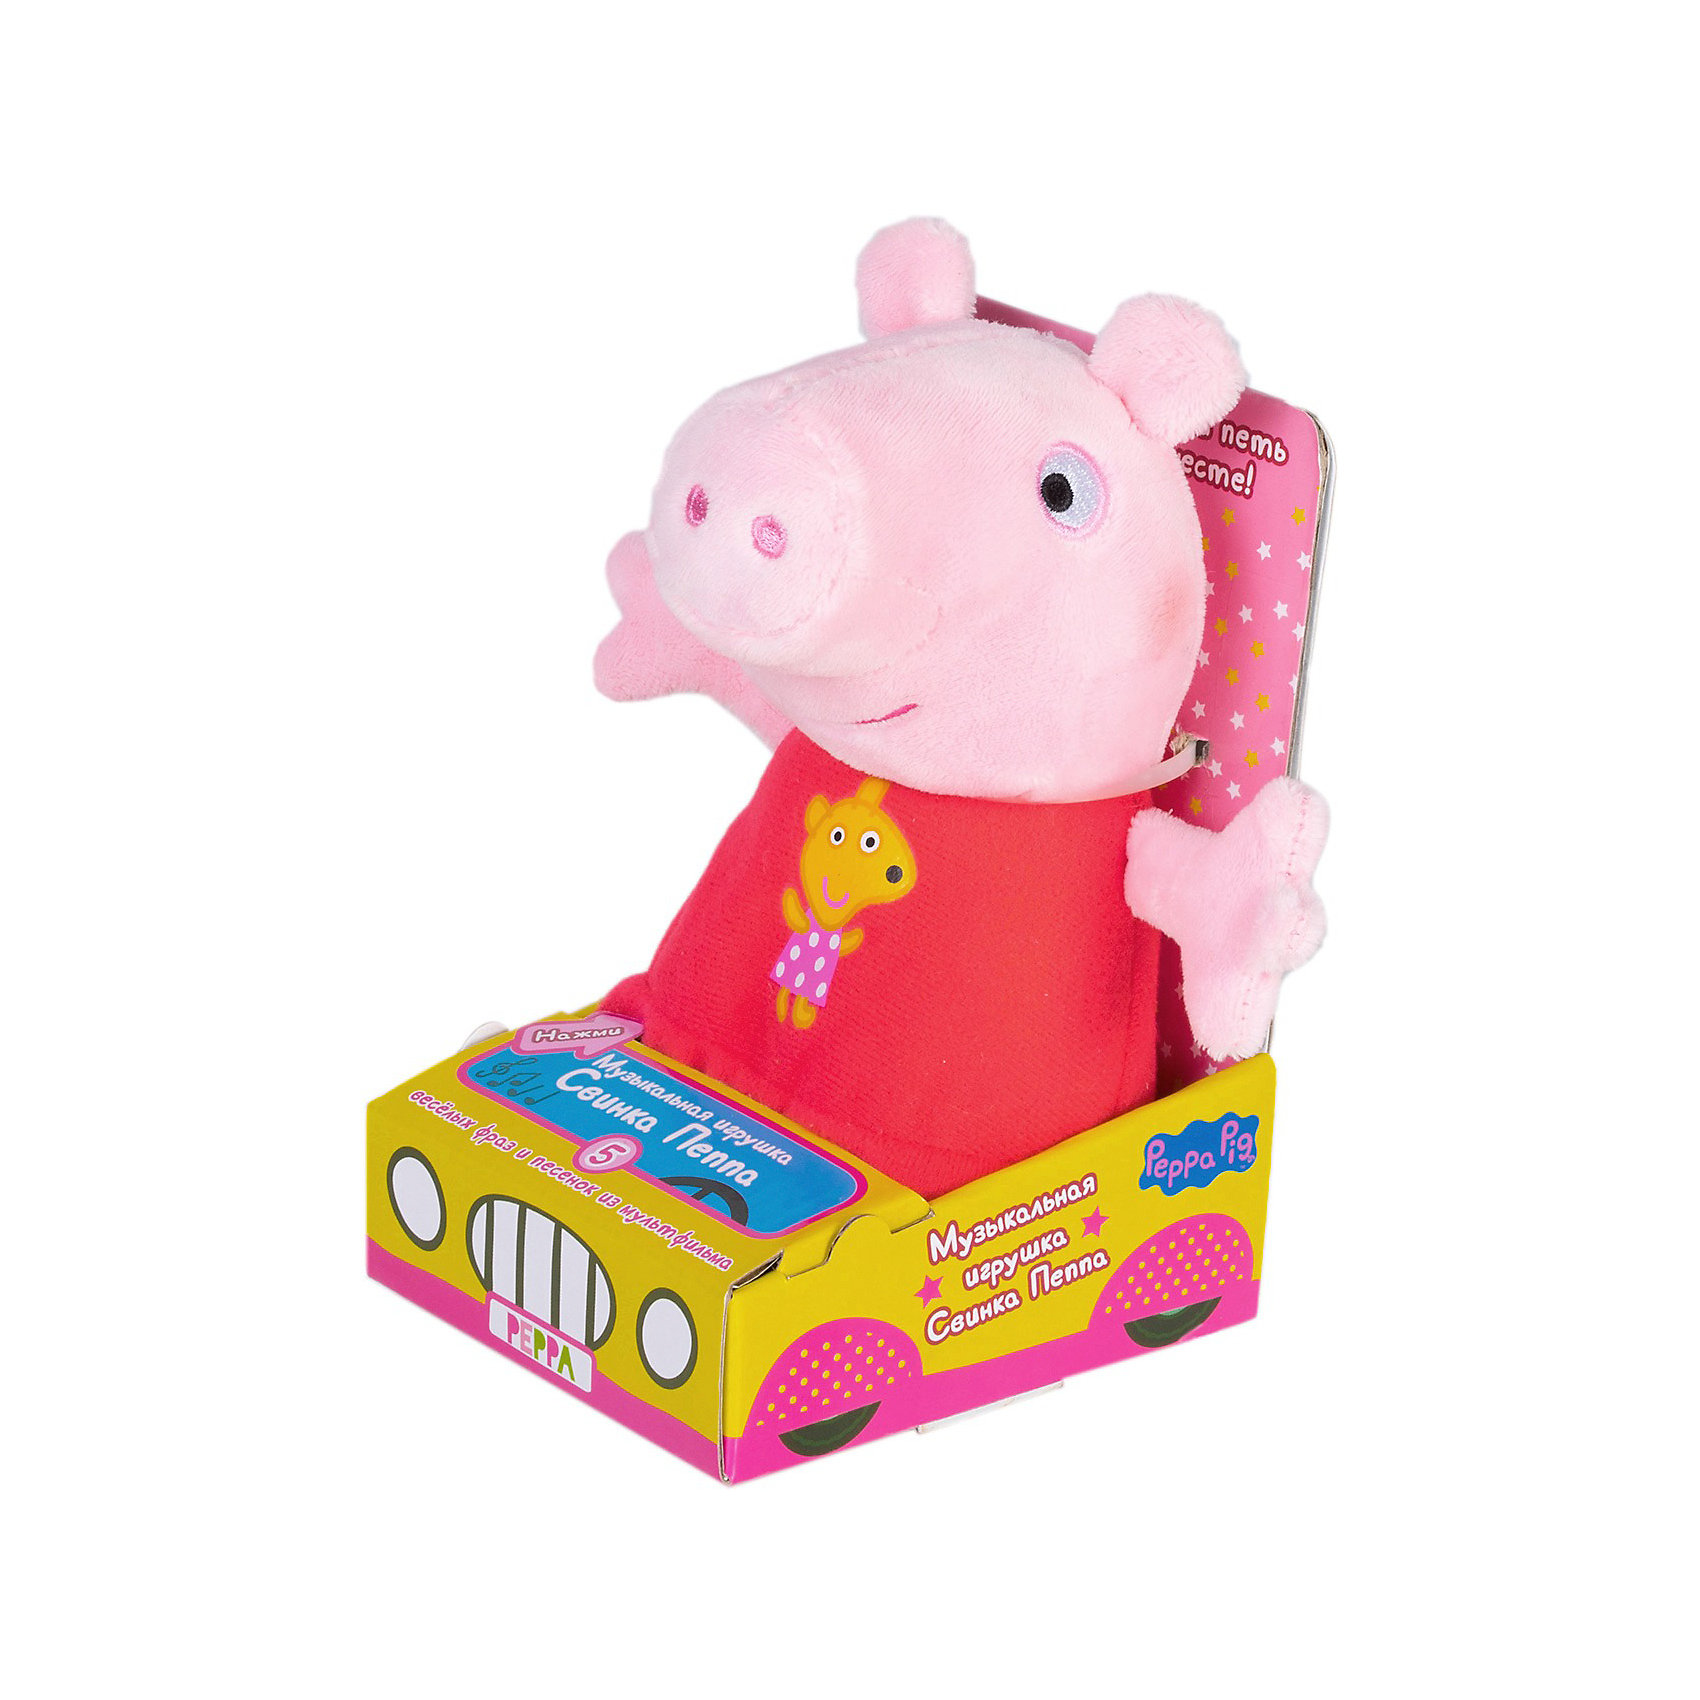 Свинку пеппу мягкую игрушку